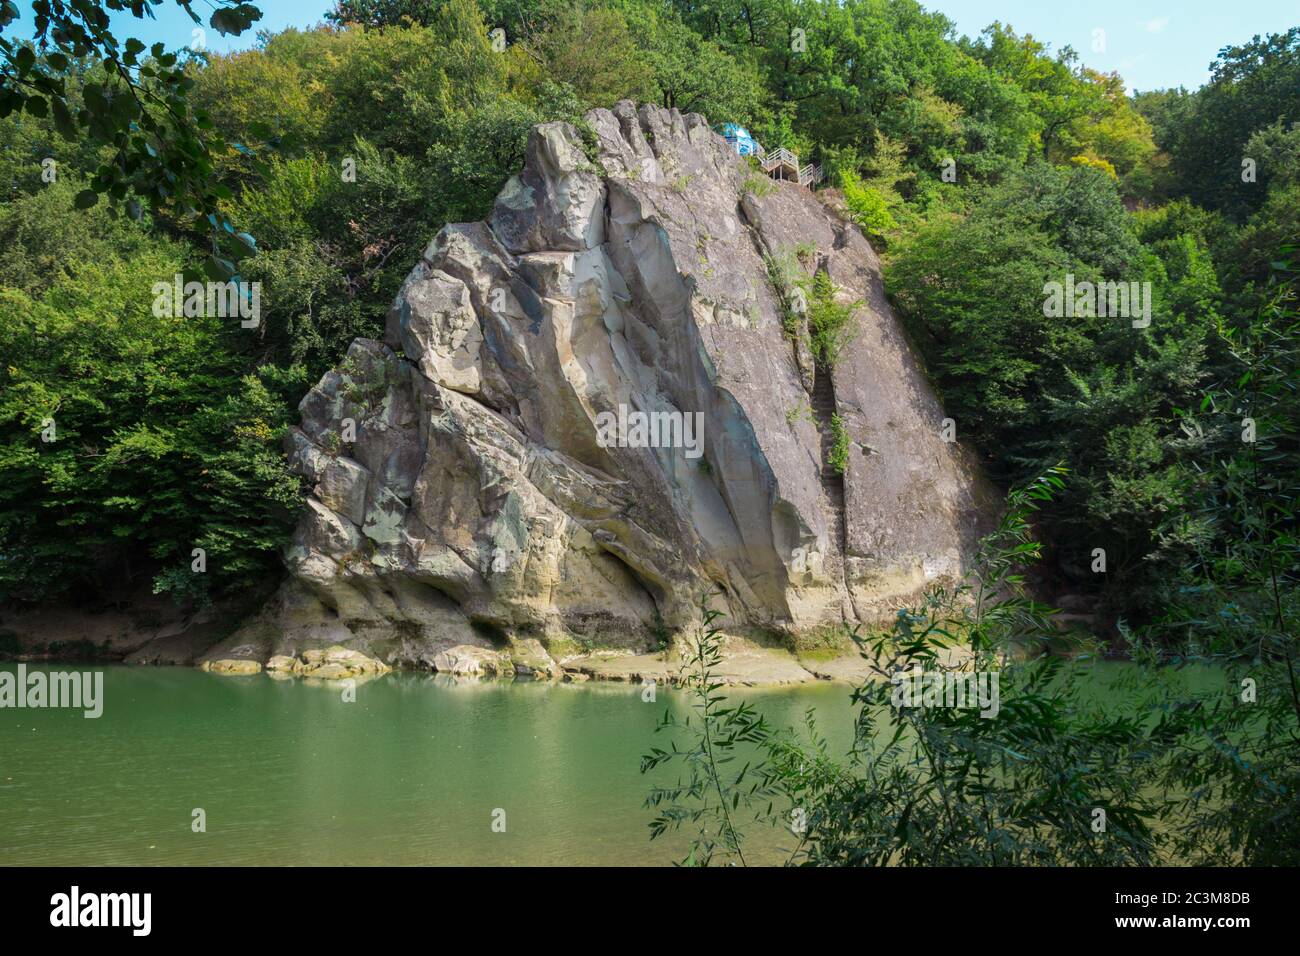 River, forest and rocks. Scenic view near Goryachy Klyuch, balneological resort in Krasnodar Krai, Russia Stock Photo